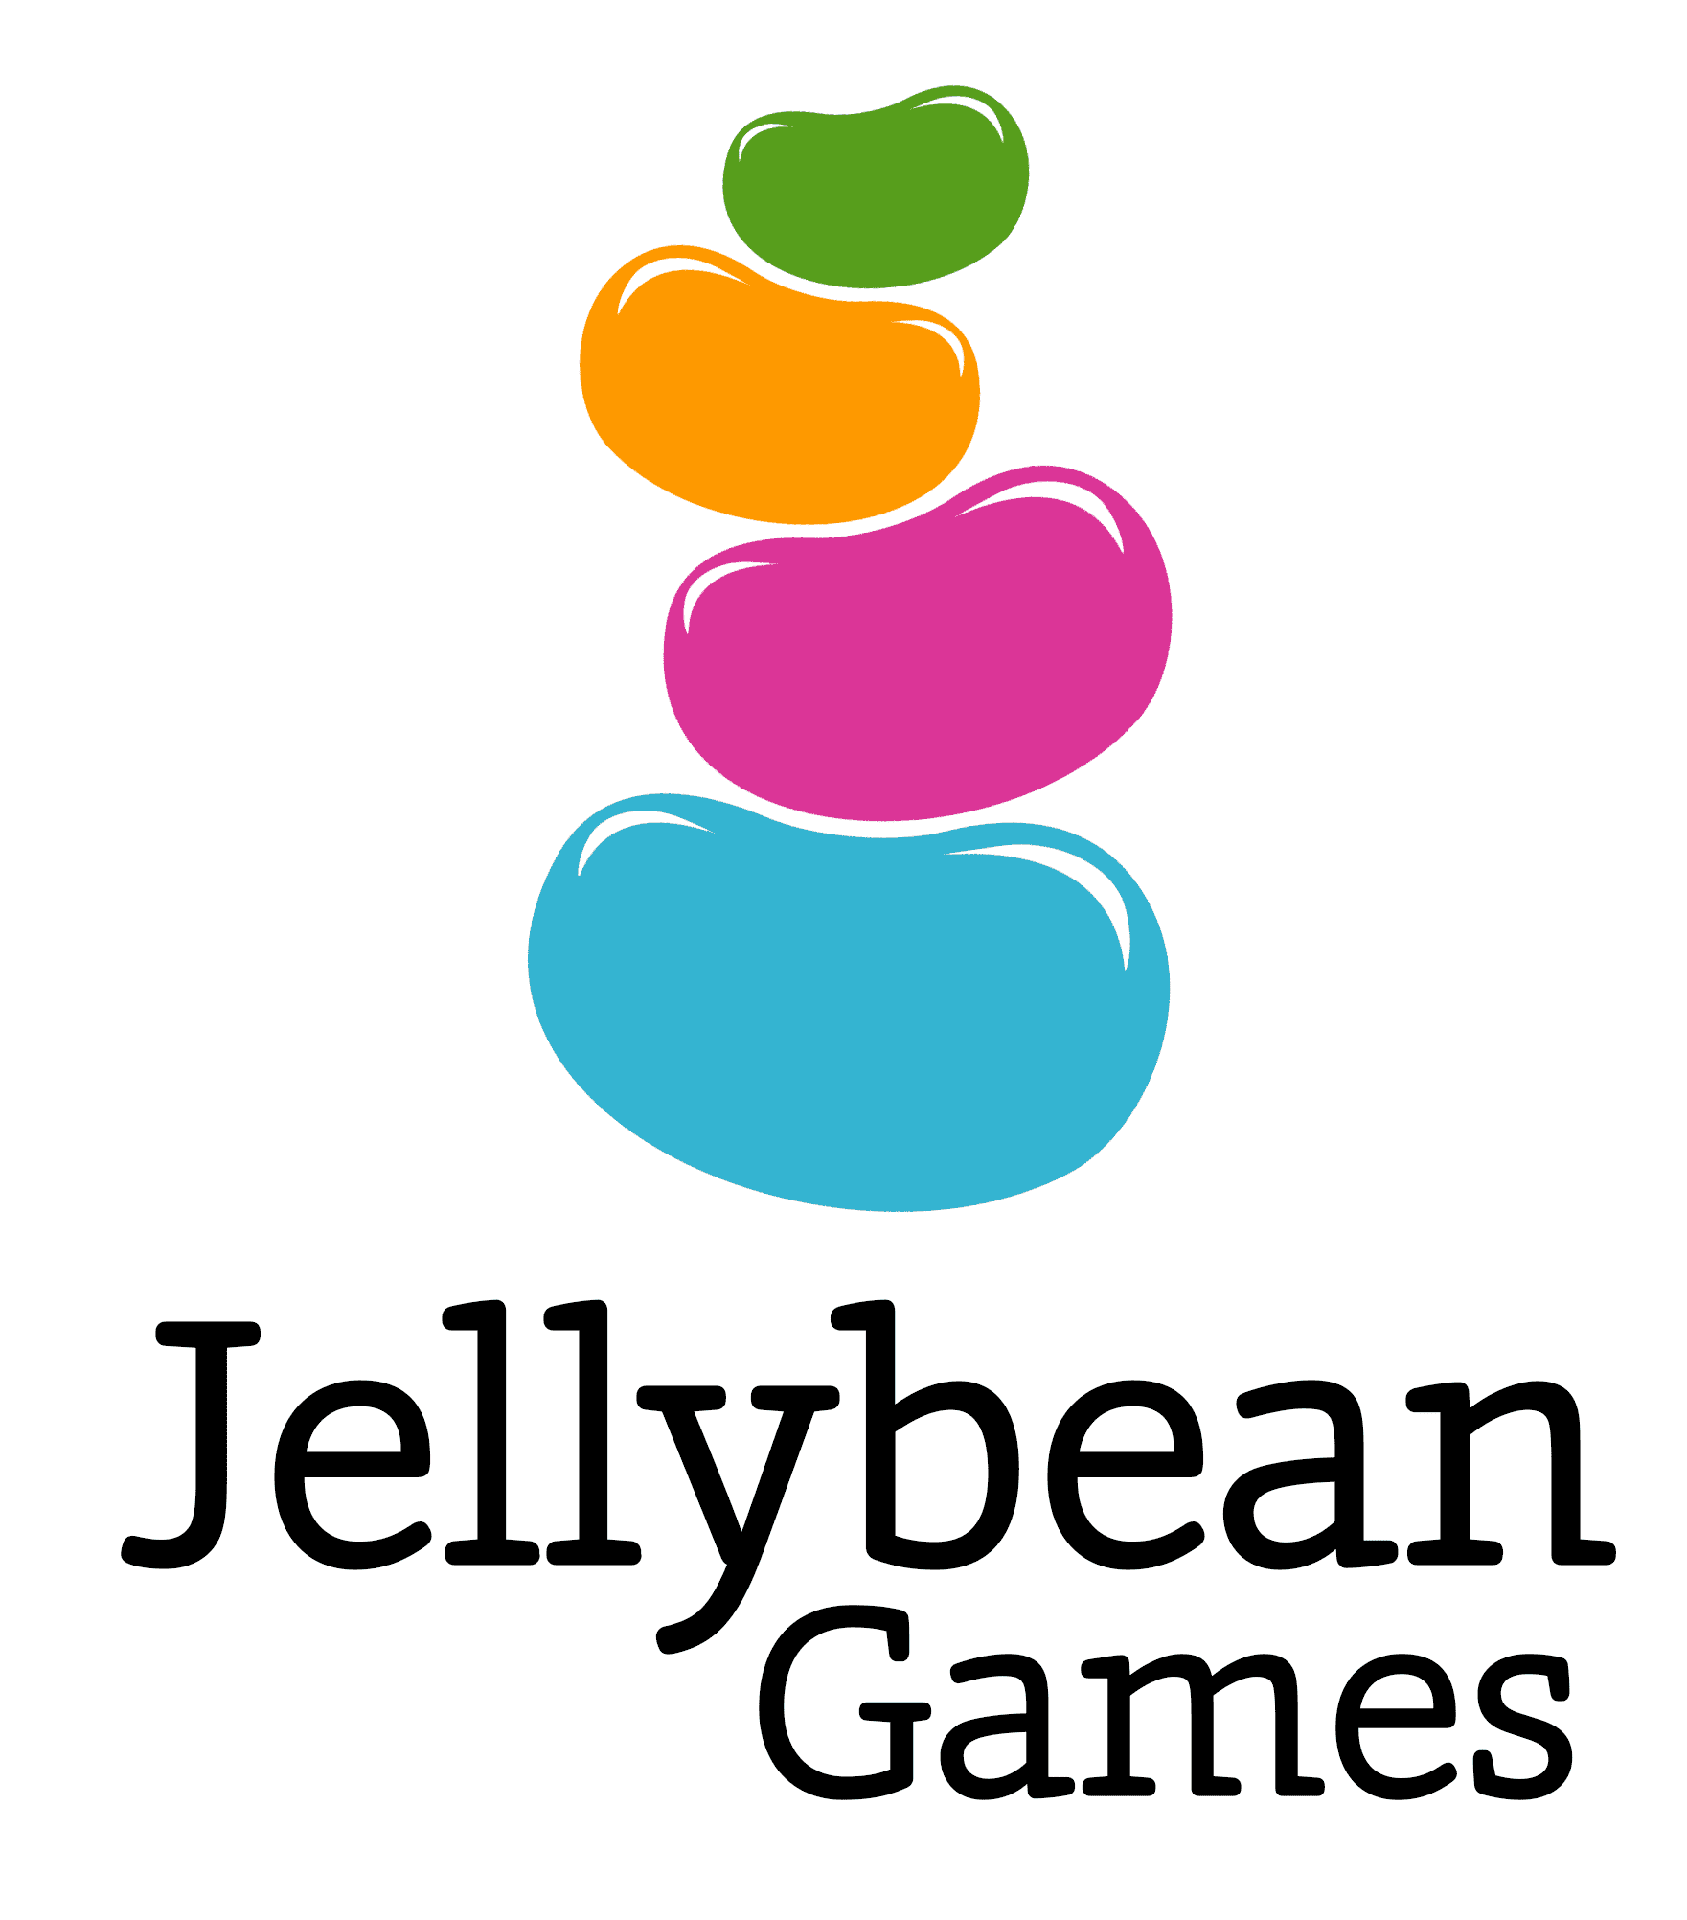 Brand: Jellybean Games